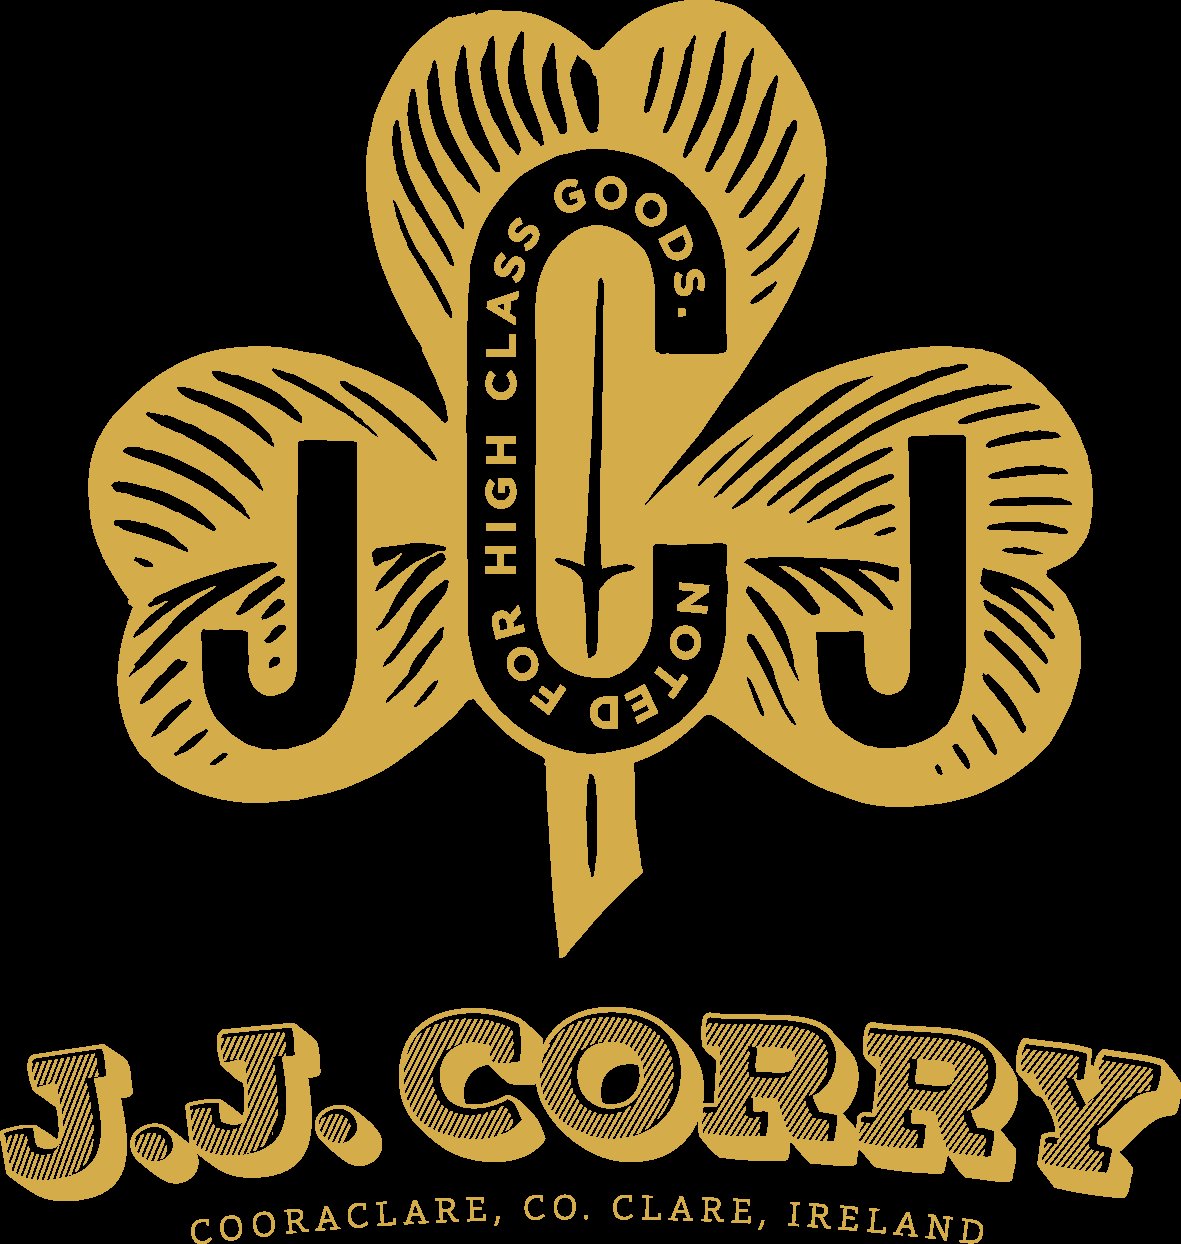 J.J. Corry